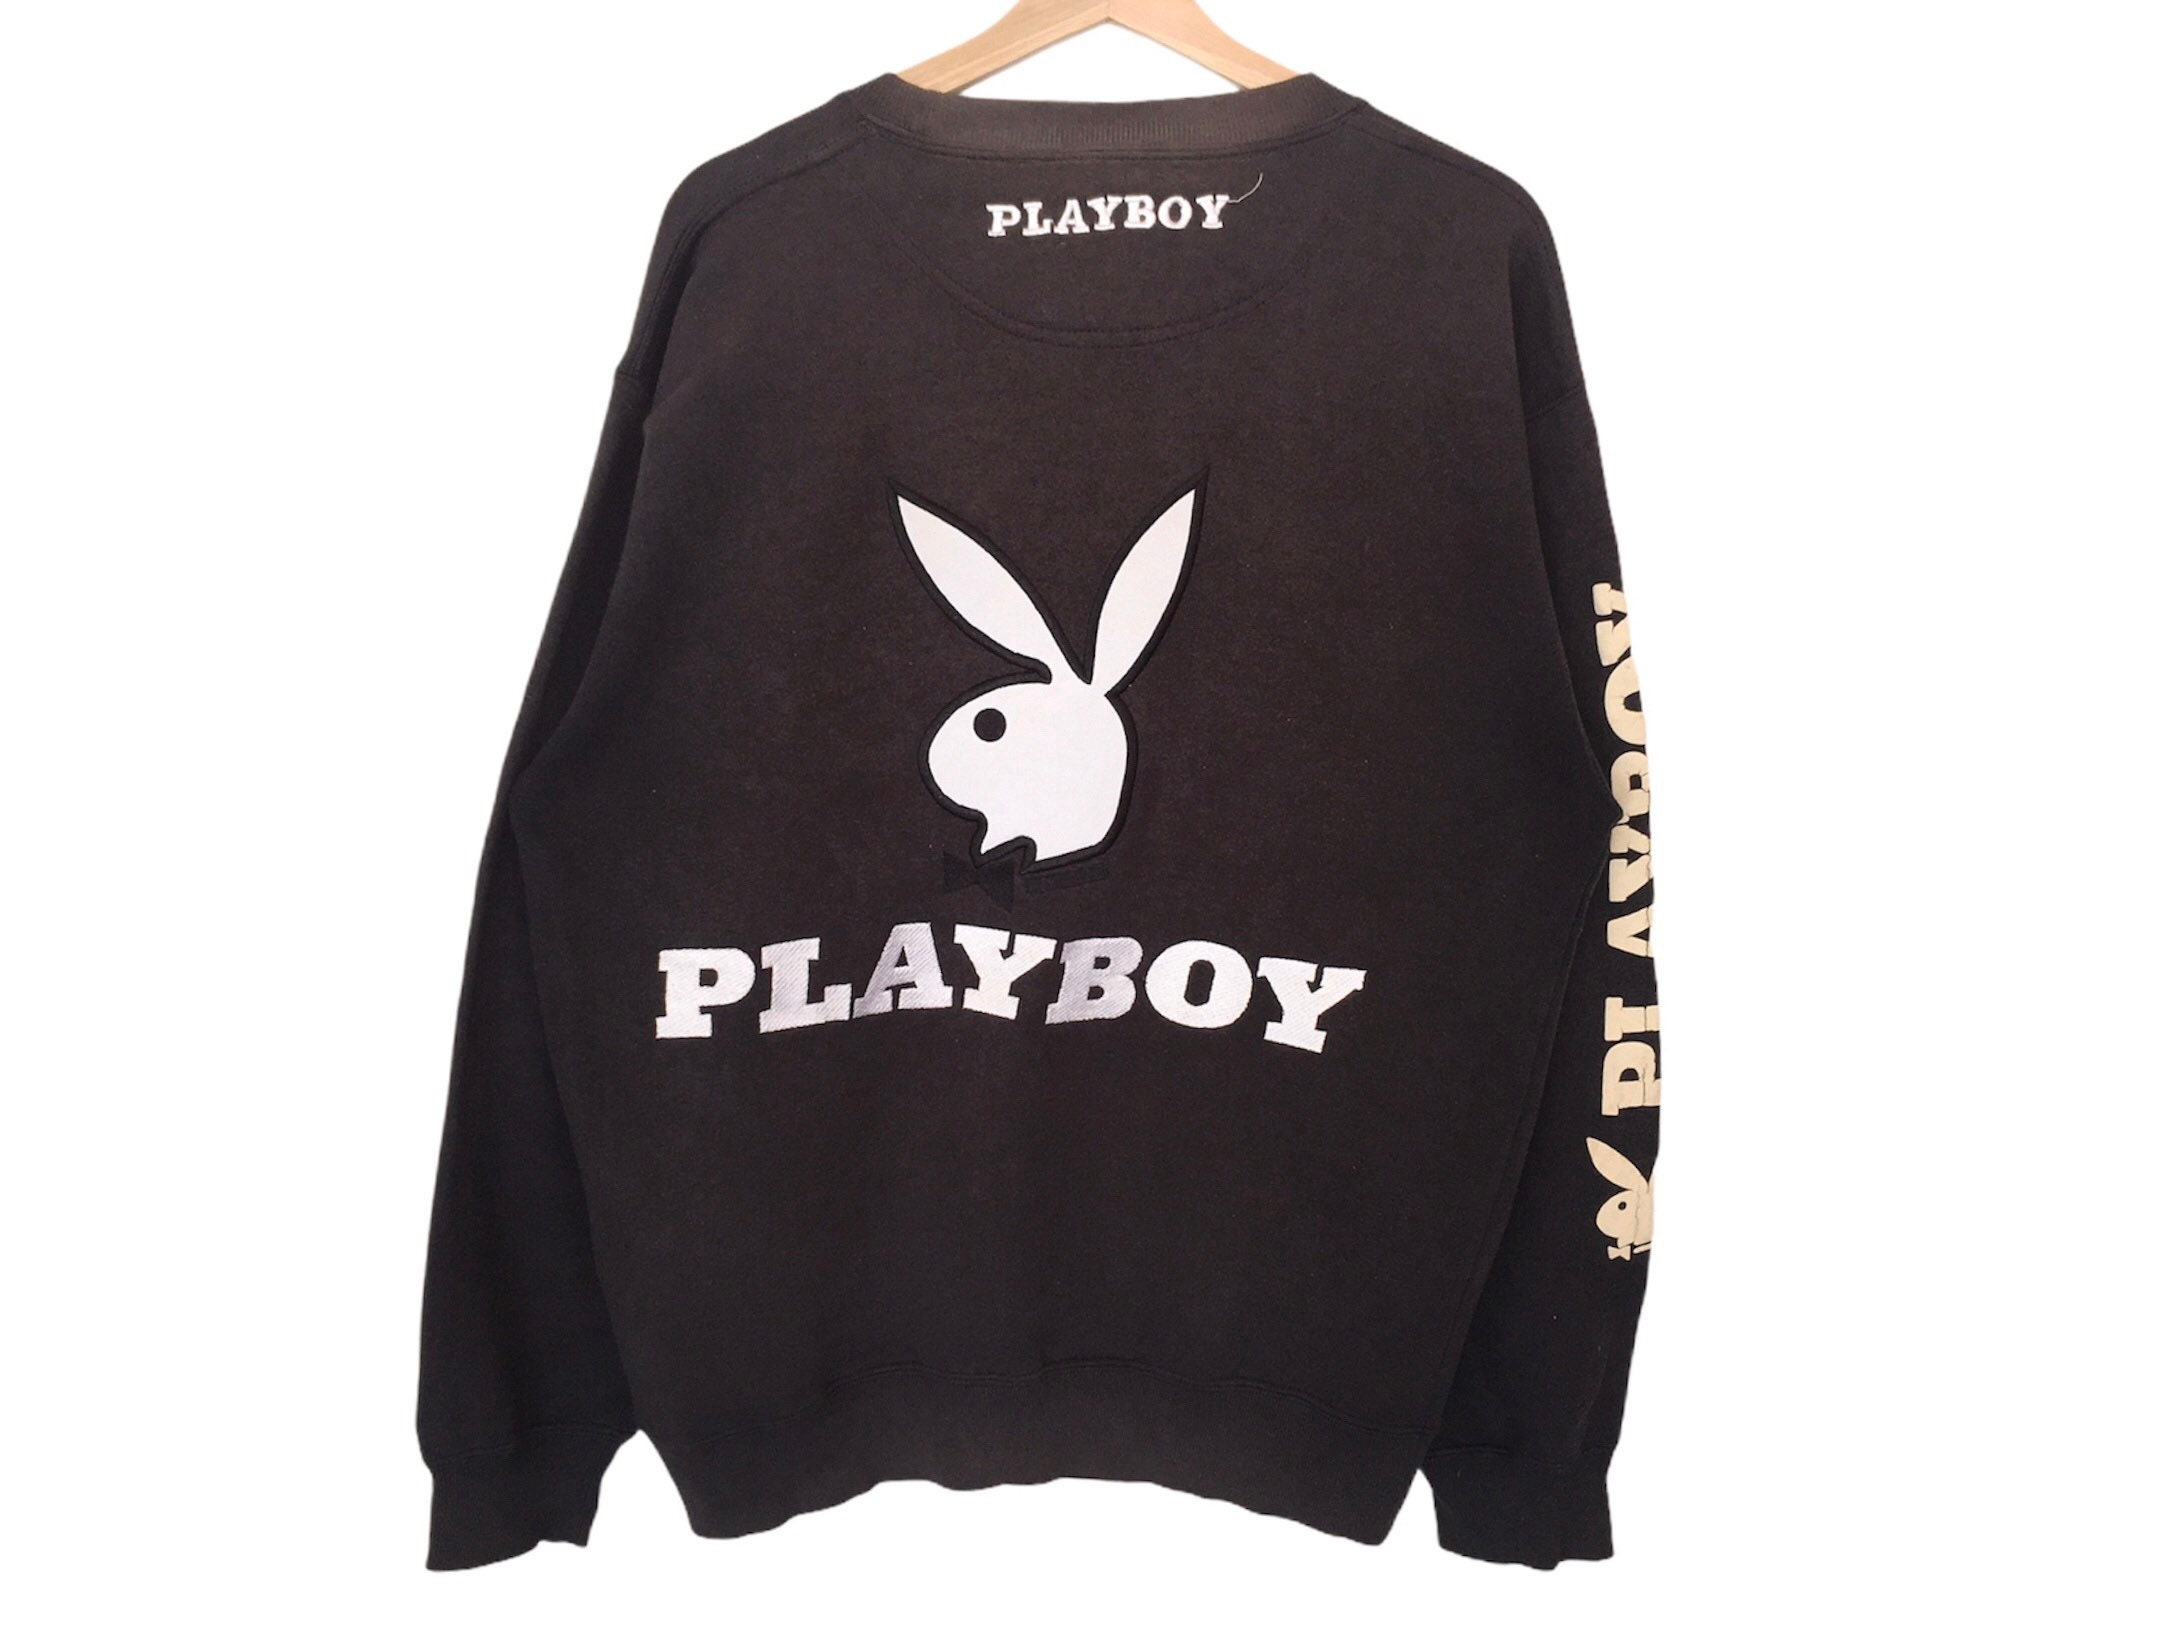 Playboy Sweatshirt  Playboy Big Logo Bunny Spell Out Crewneck  Hip Hop Swag Streetwear Activewear Dope Hype Rap